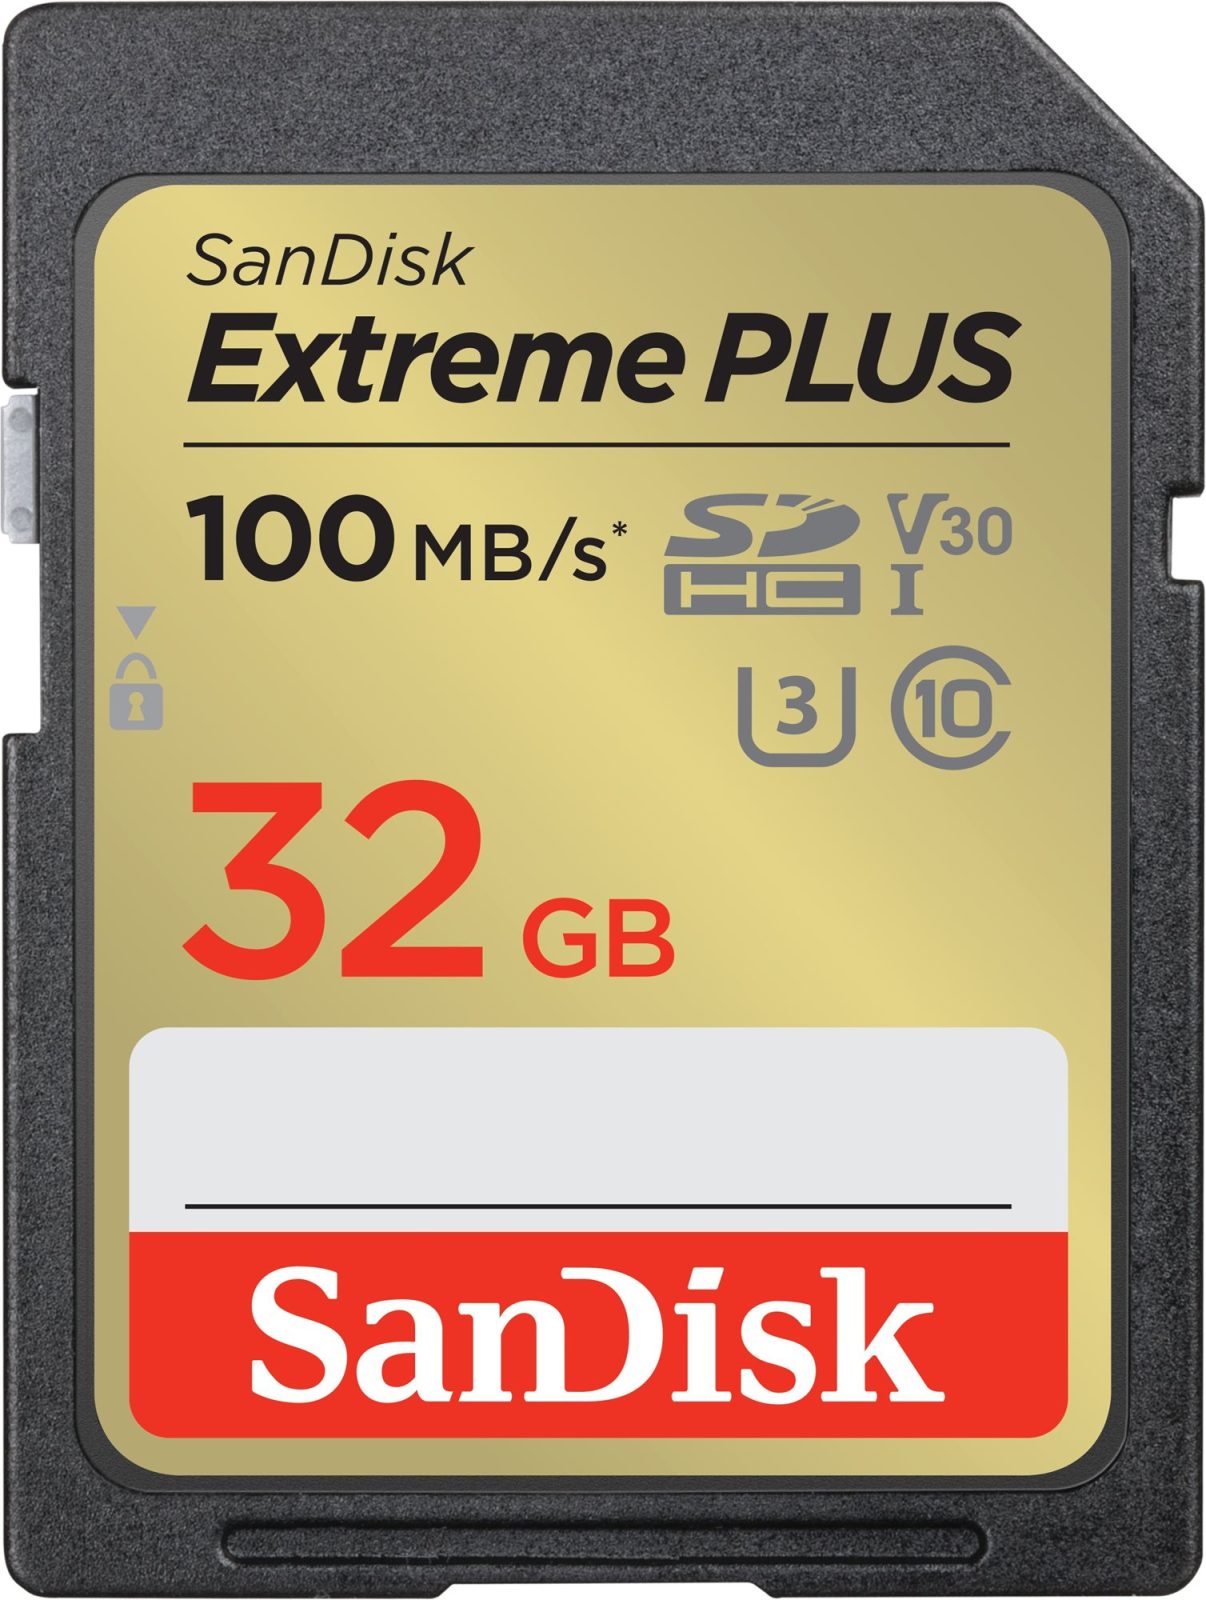 Memóriakártya SanDisk SDHC 32 GB Extreme PLUS + Rescue PRO Deluxe